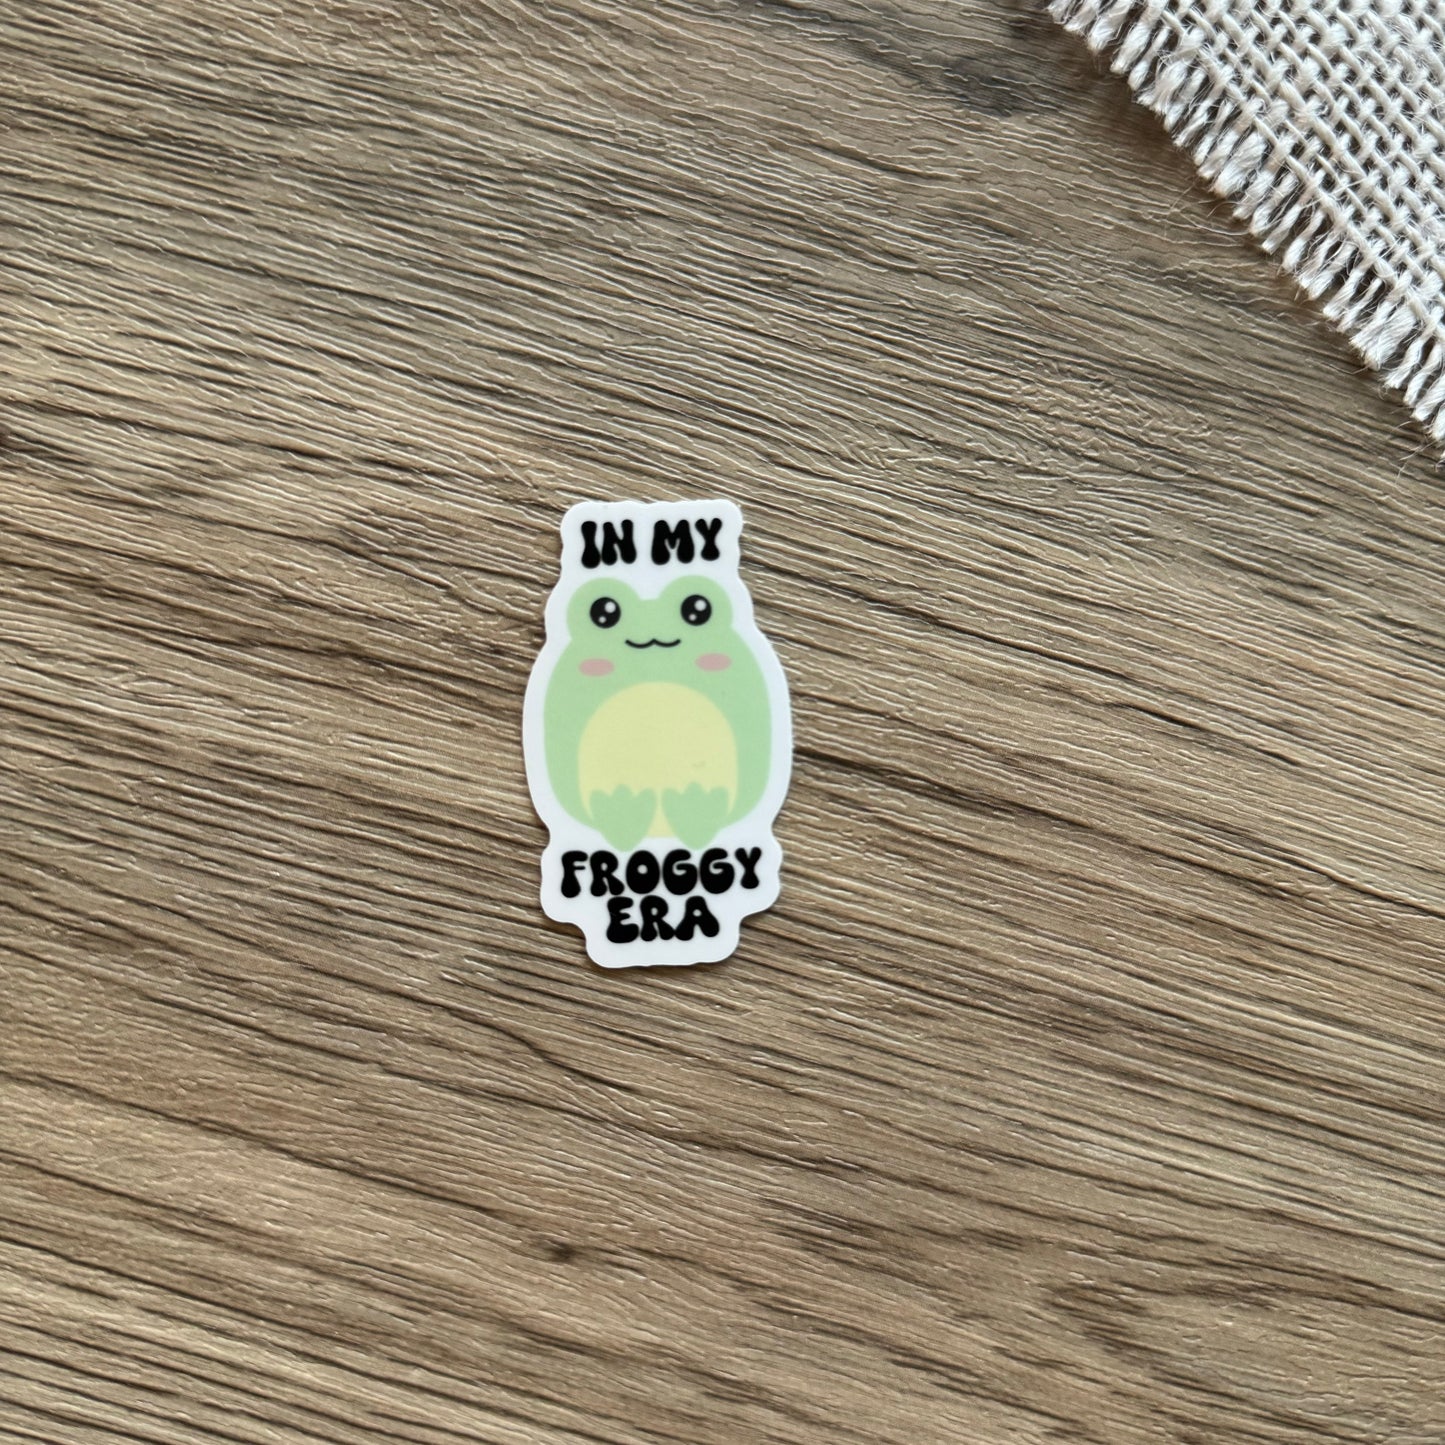 Froggy Era| In my Spring frog kawaii cutesy era| waterproof vinyl sticker| perfect for kindle, water bottle, laptop, iPad & more!